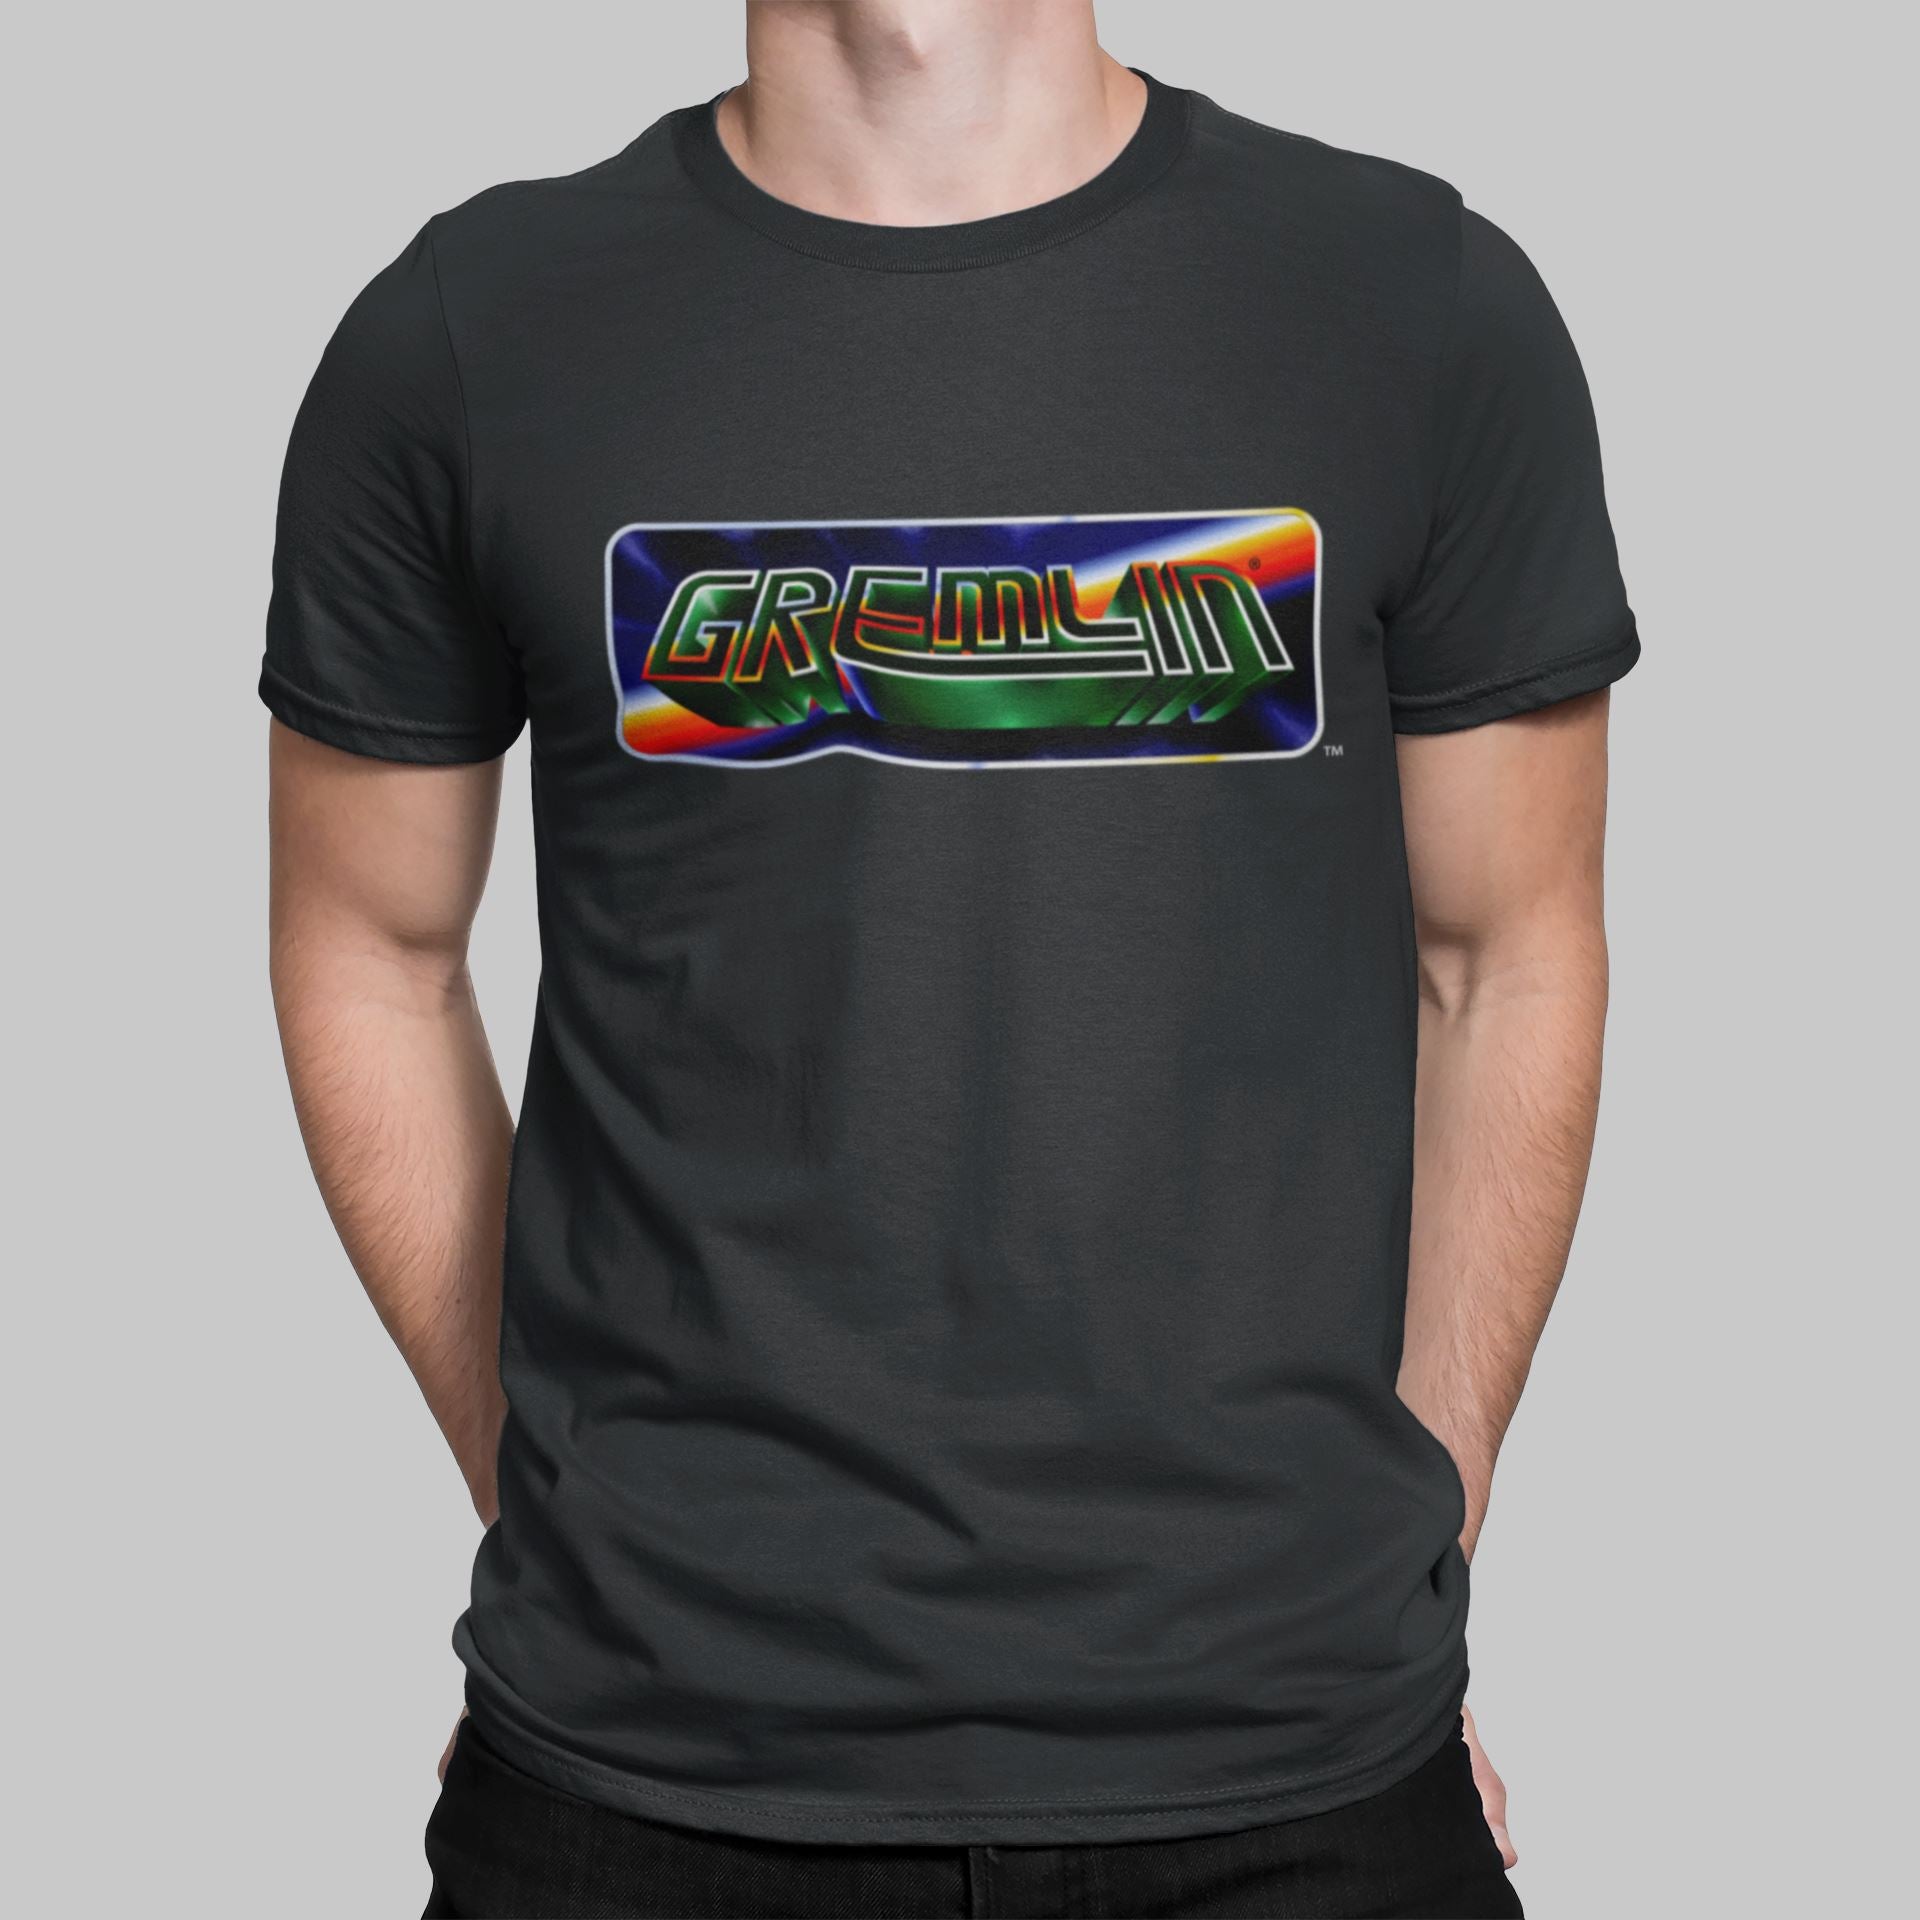 Gremlin Graphics Retro Gaming T-Shirt T-Shirt Seven Squared Small 34-36" Black 